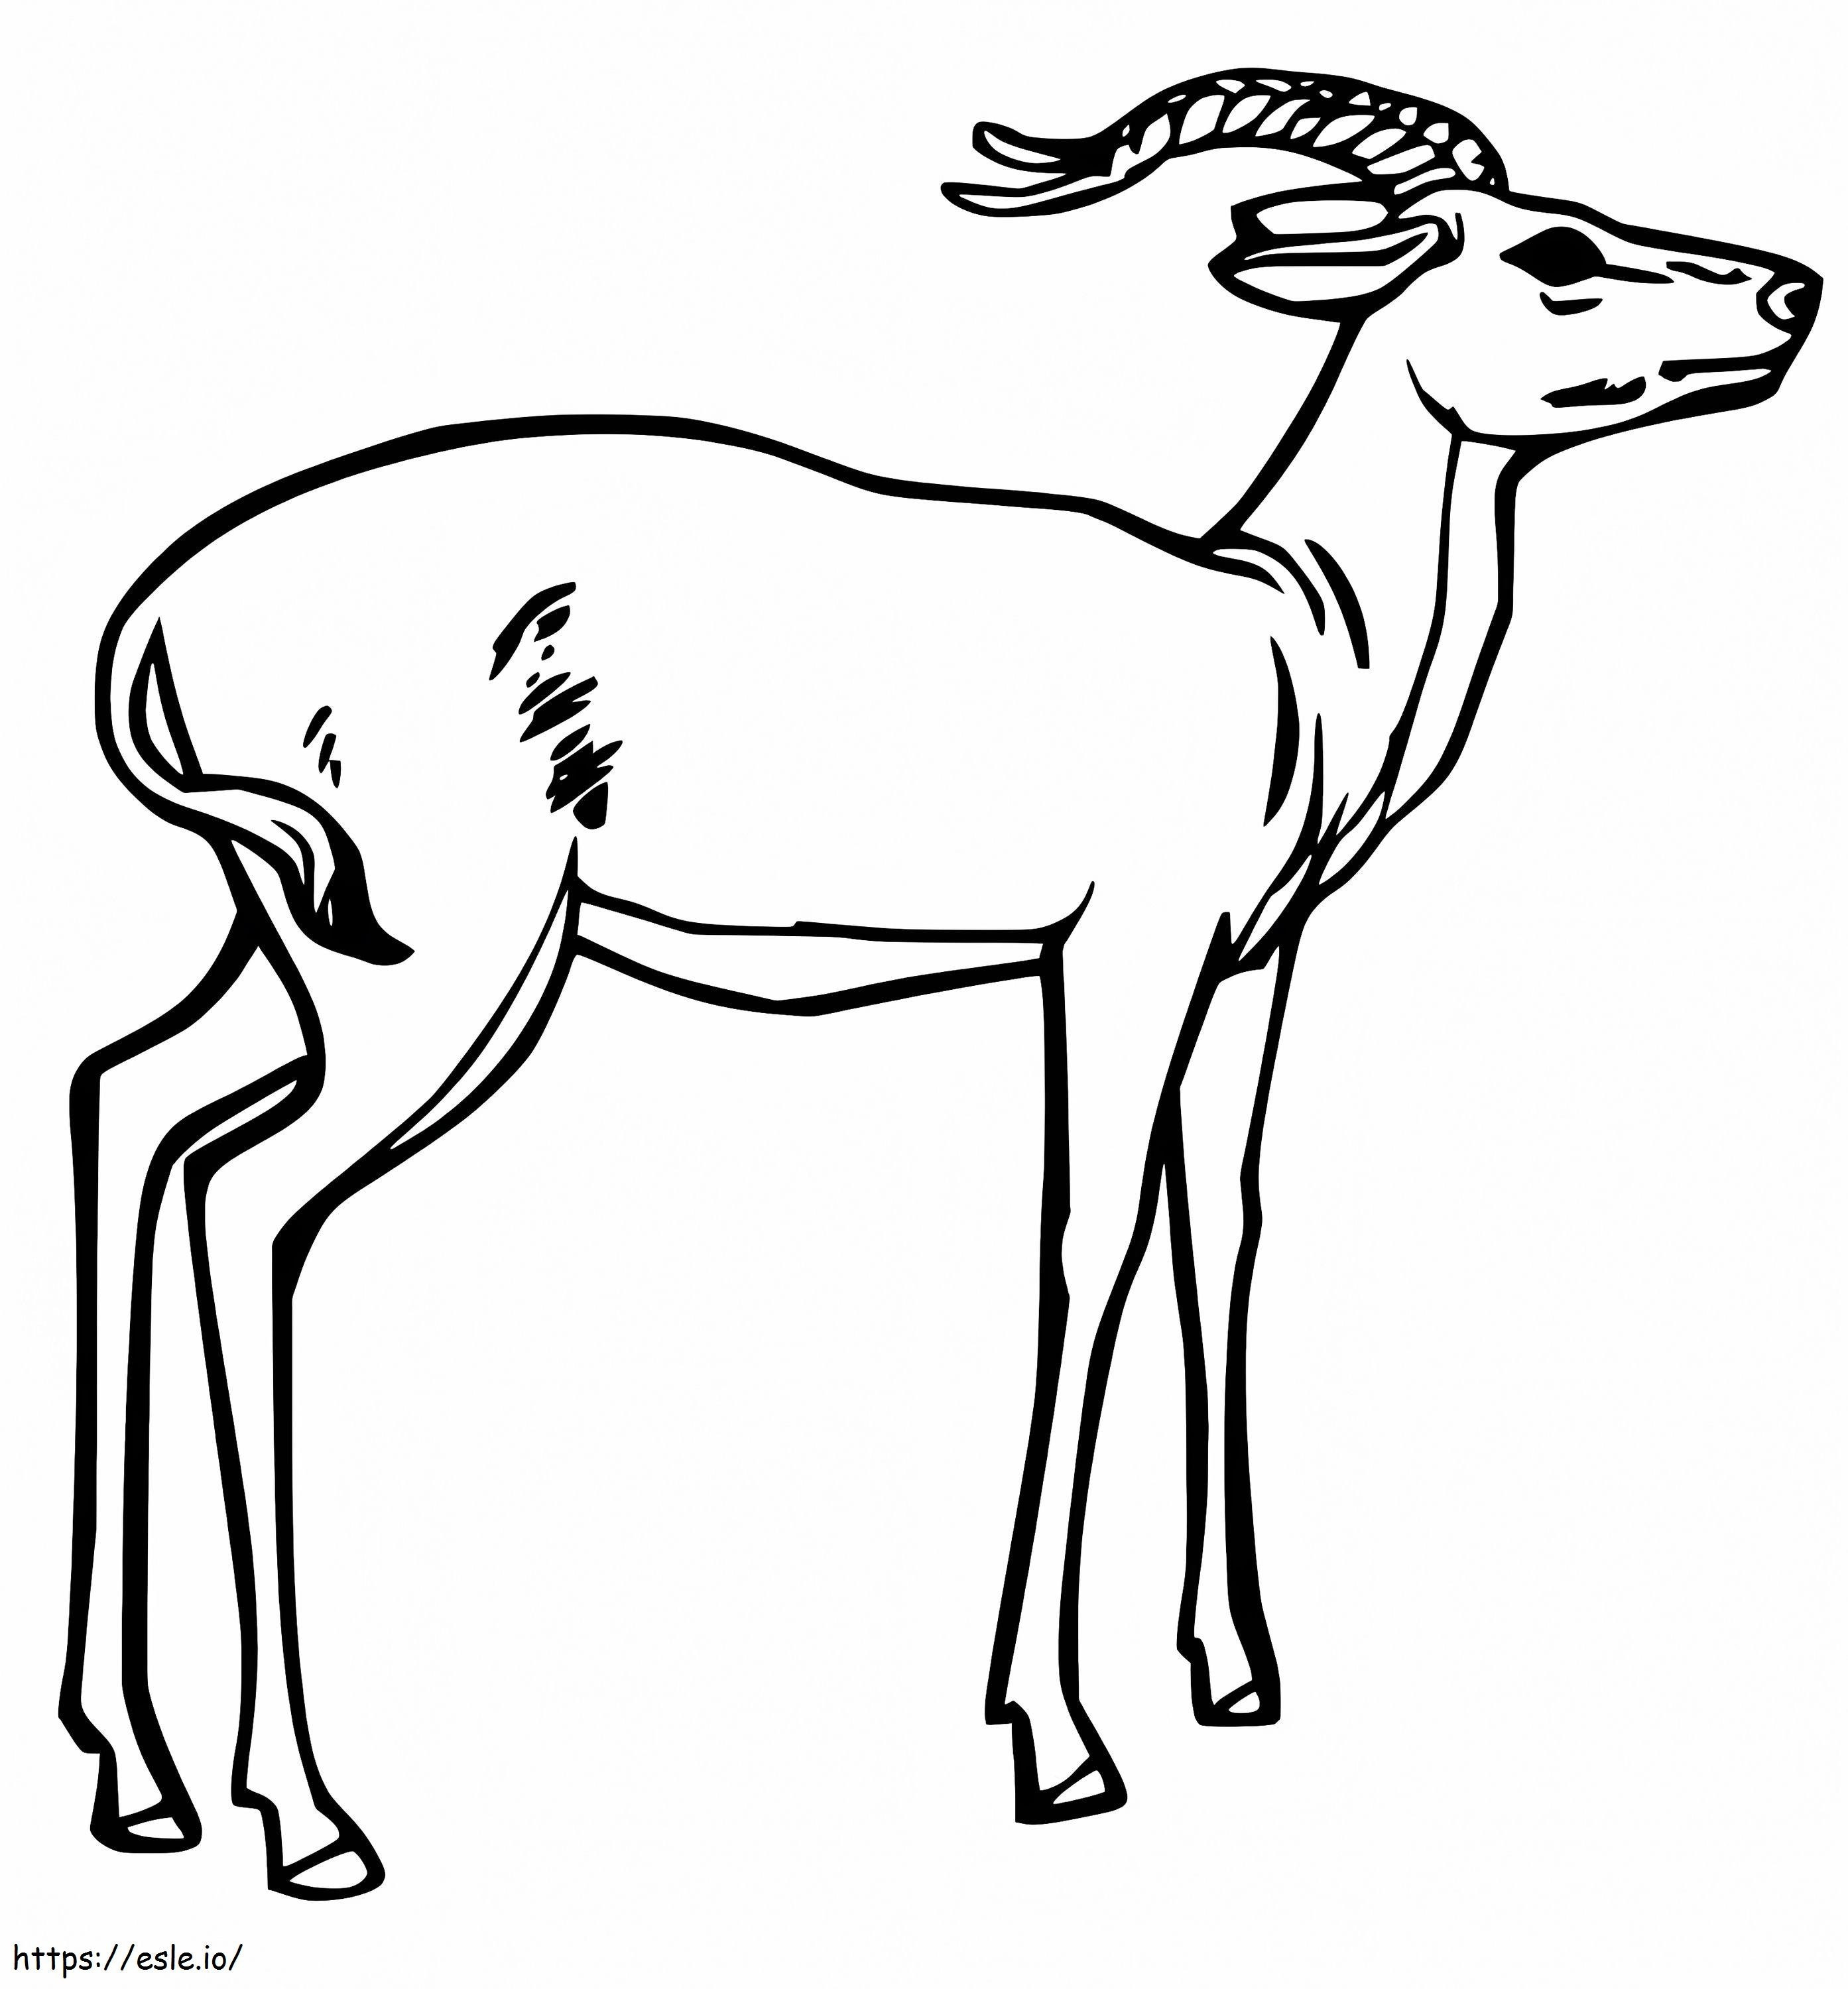 Free Impala coloring page